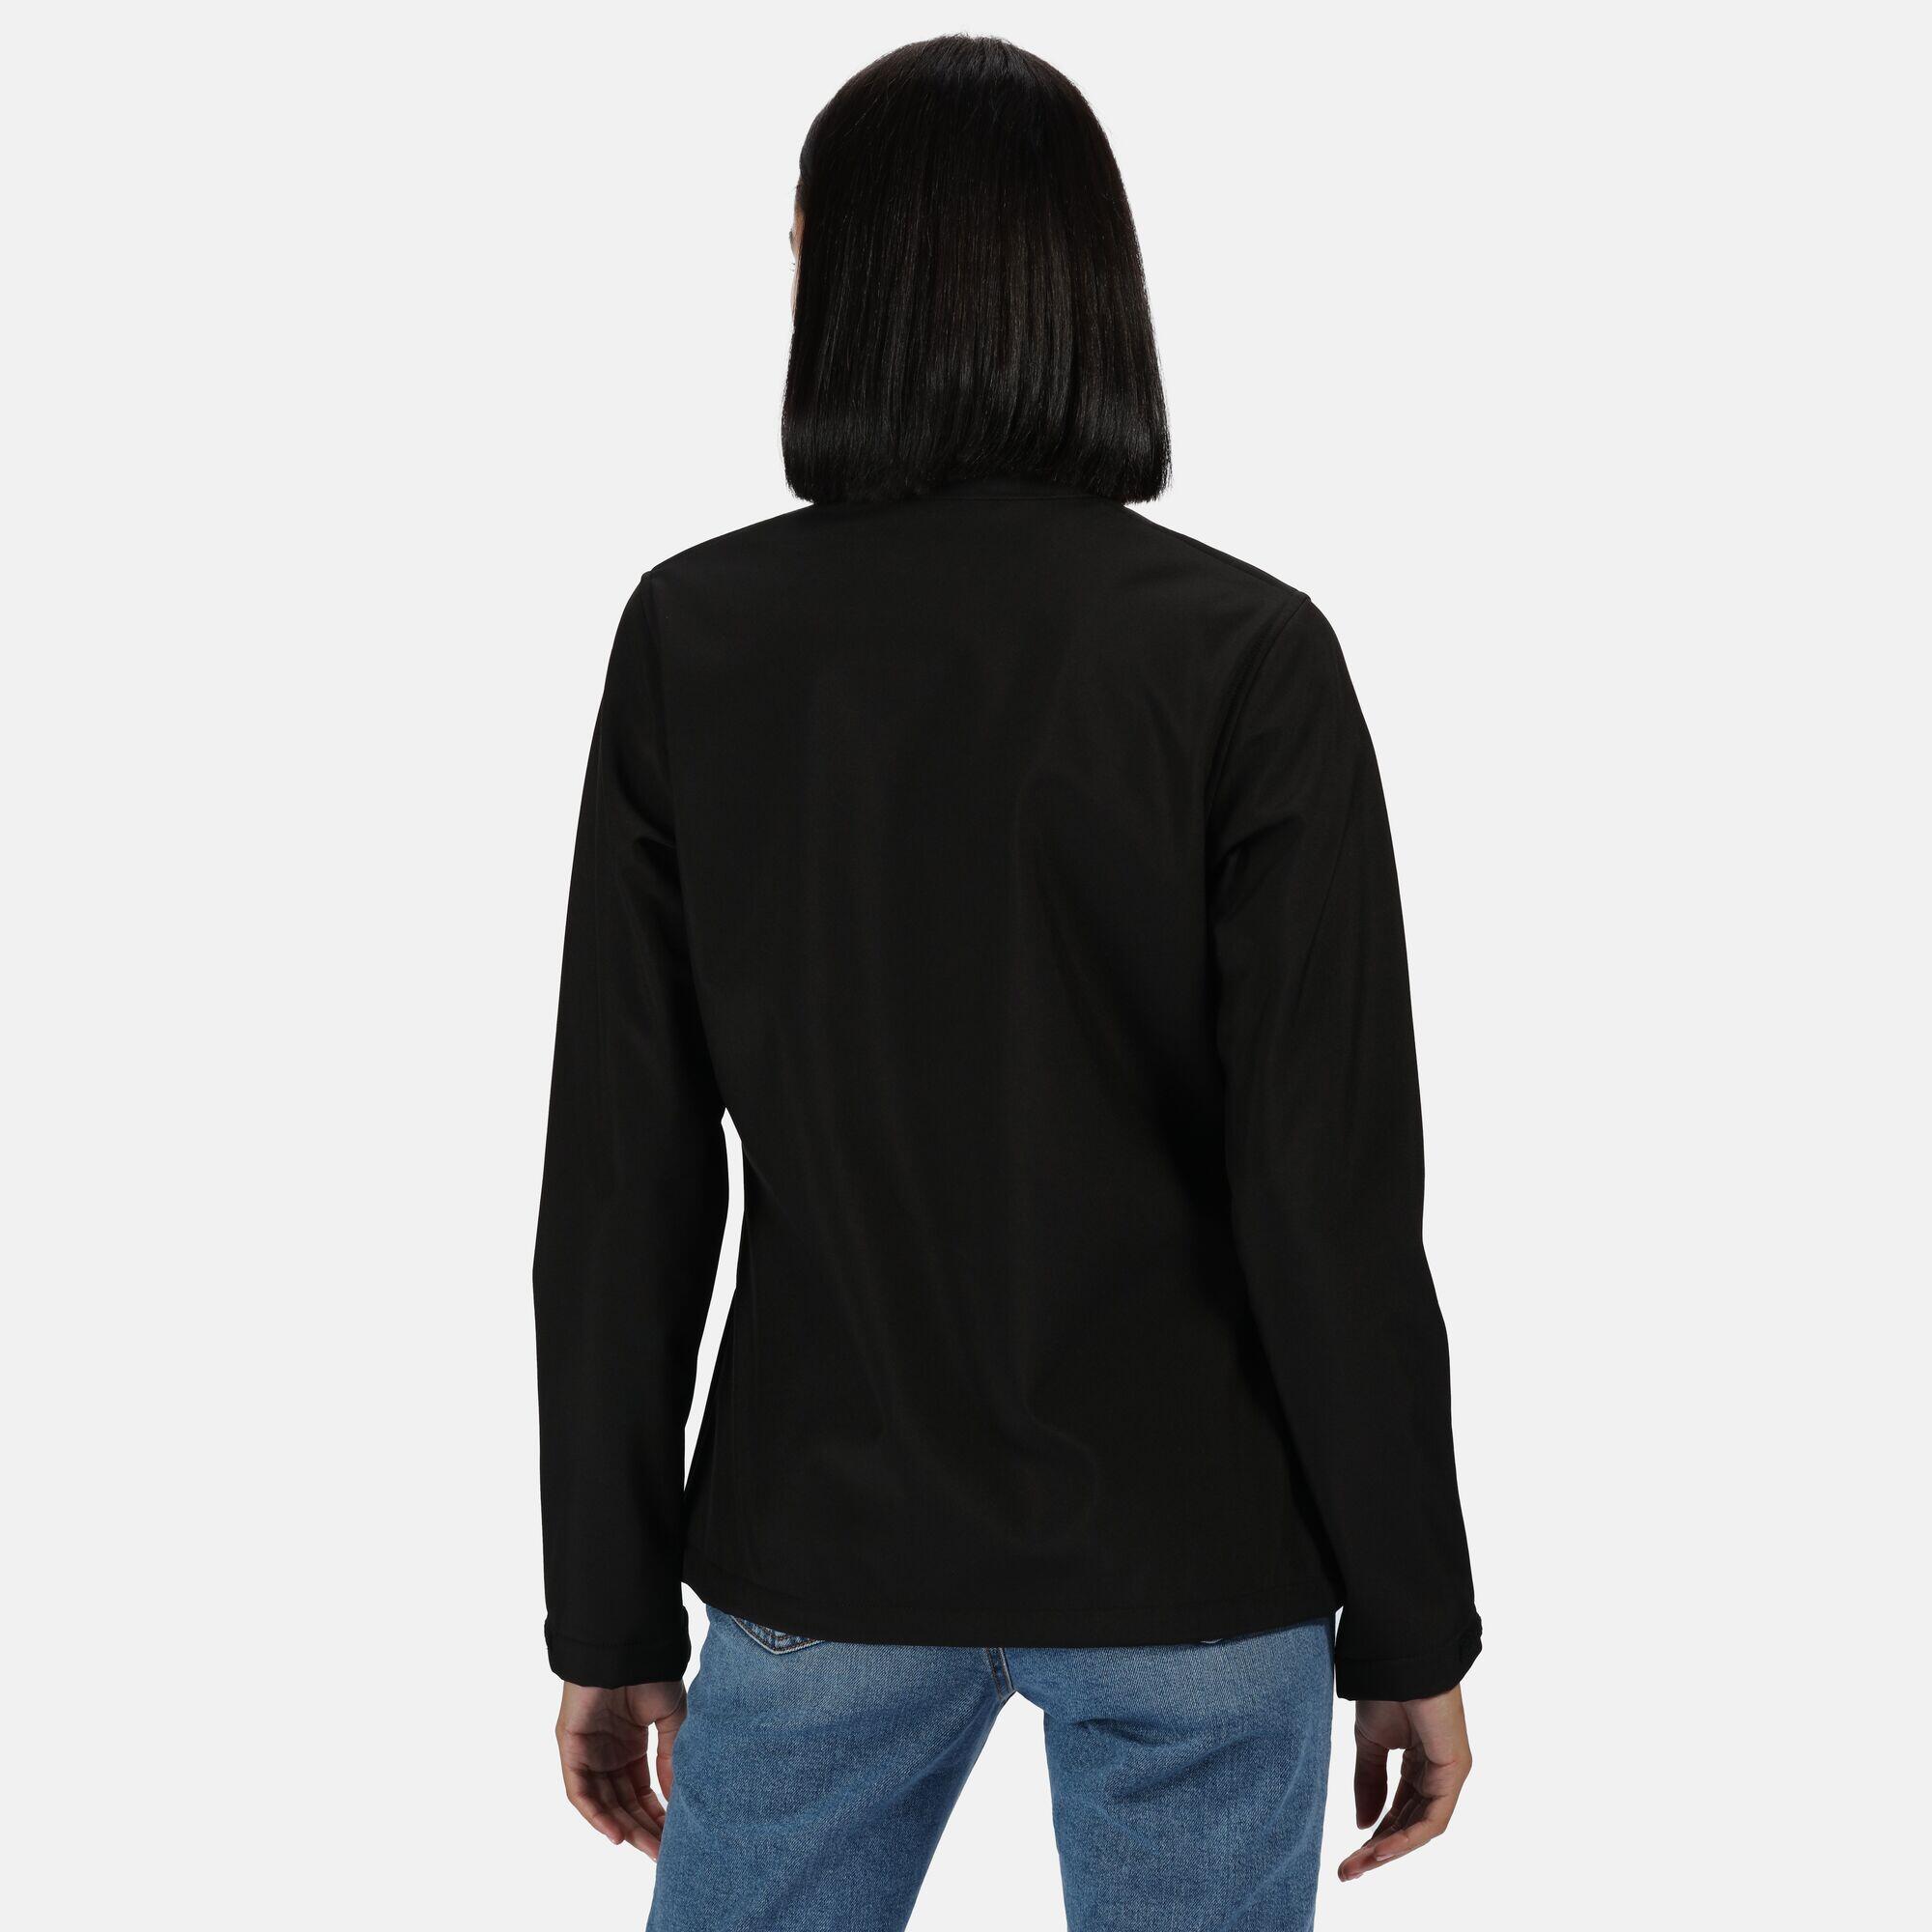 Womens/Ladies Ablaze Three Layer Soft Shell Jacket (Black) 2/5